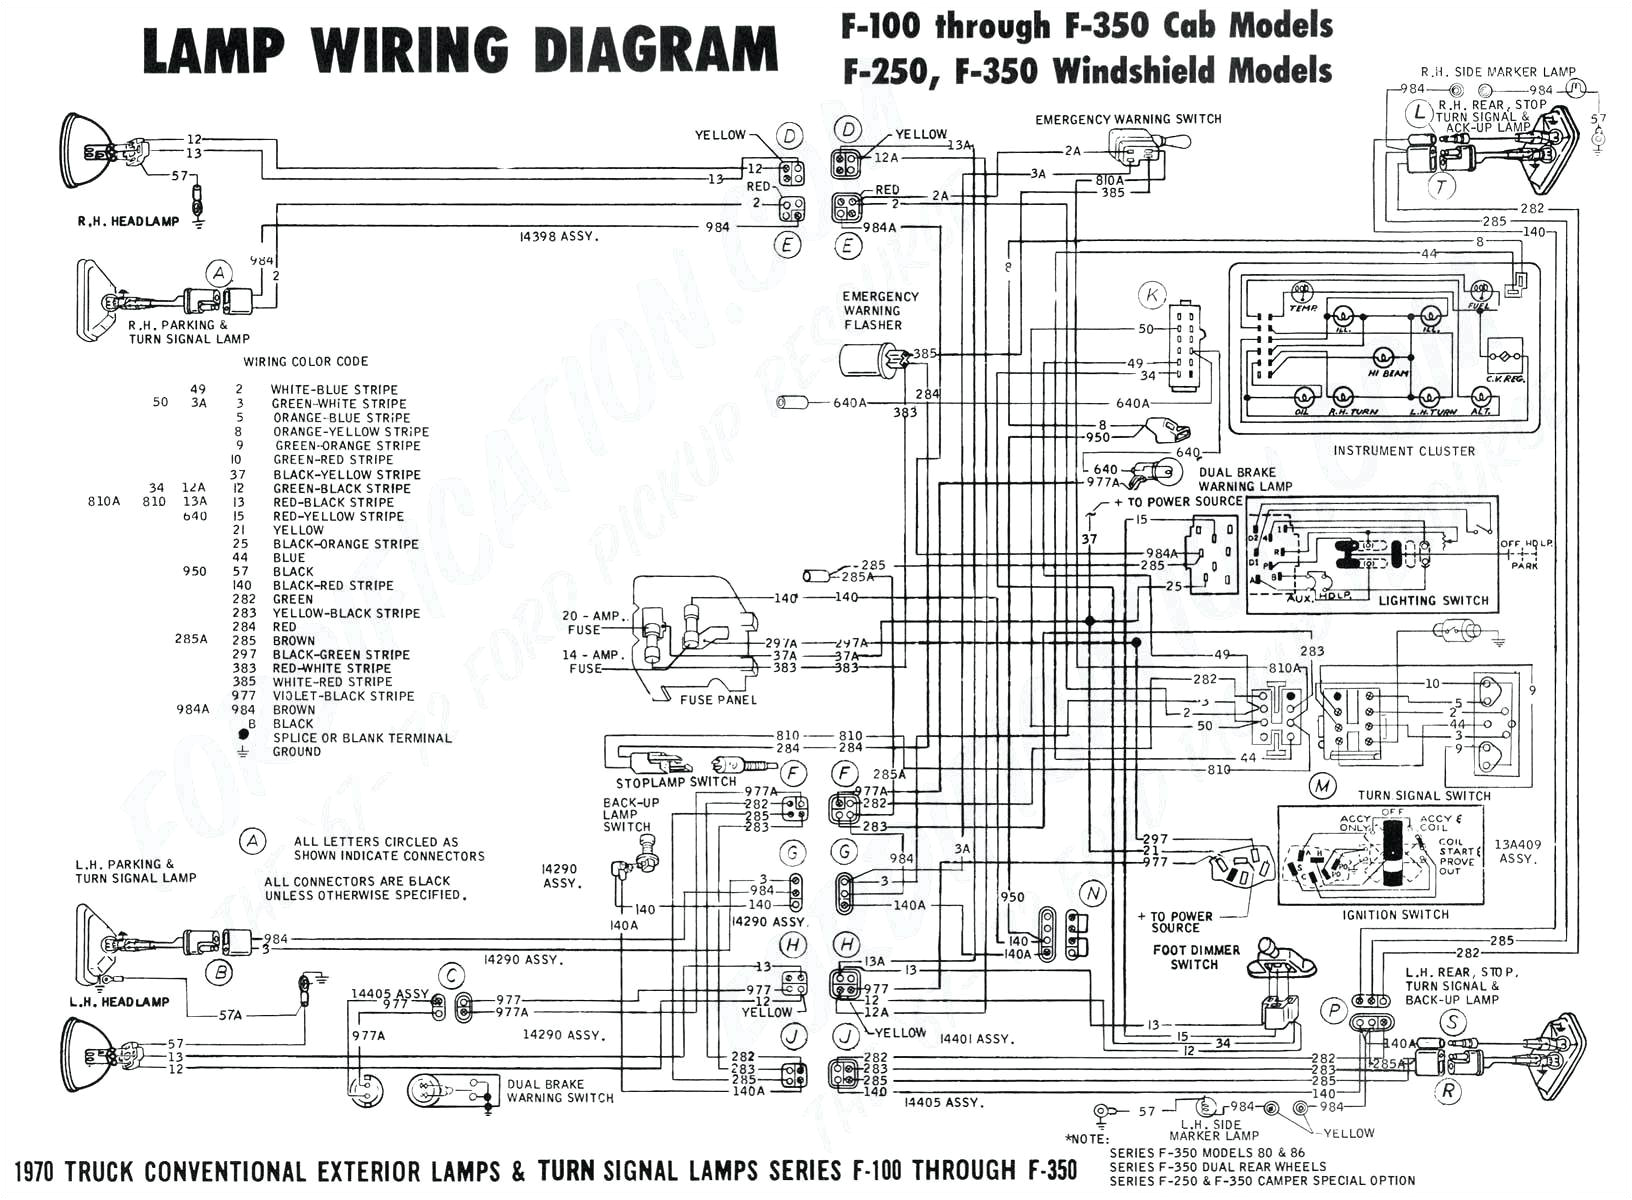 Autoloc Door Popper Wiring Diagram Unicell Wiring Diagram Blog Wiring Diagram